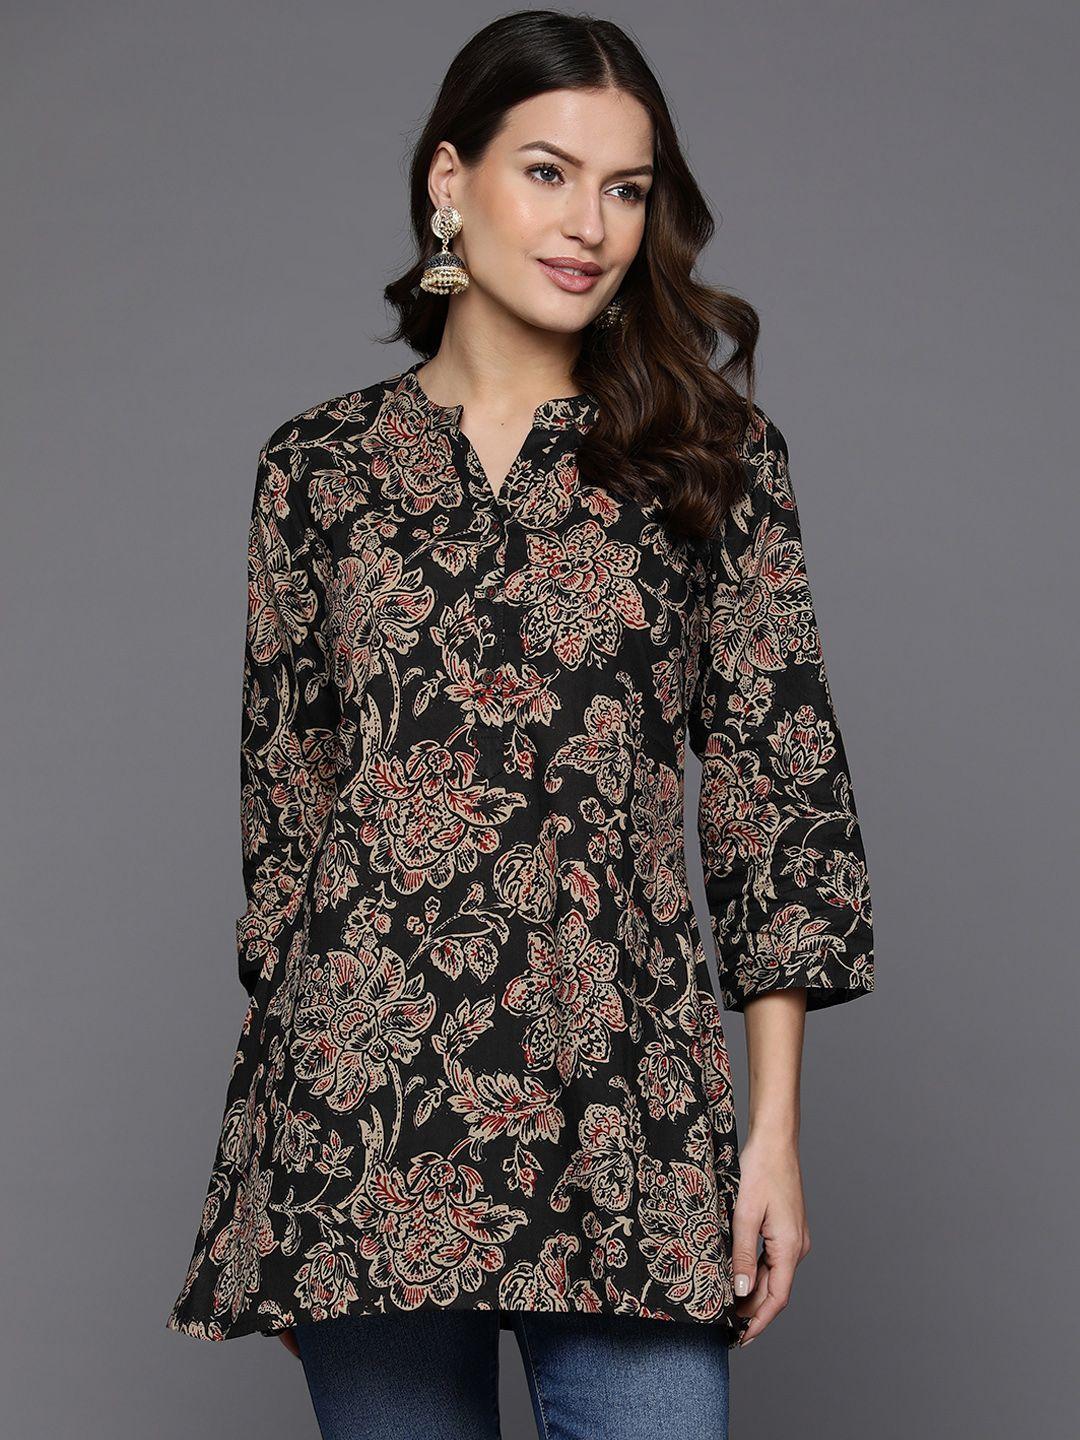 indo-era-mandarin-collar-floral-printed-tunic